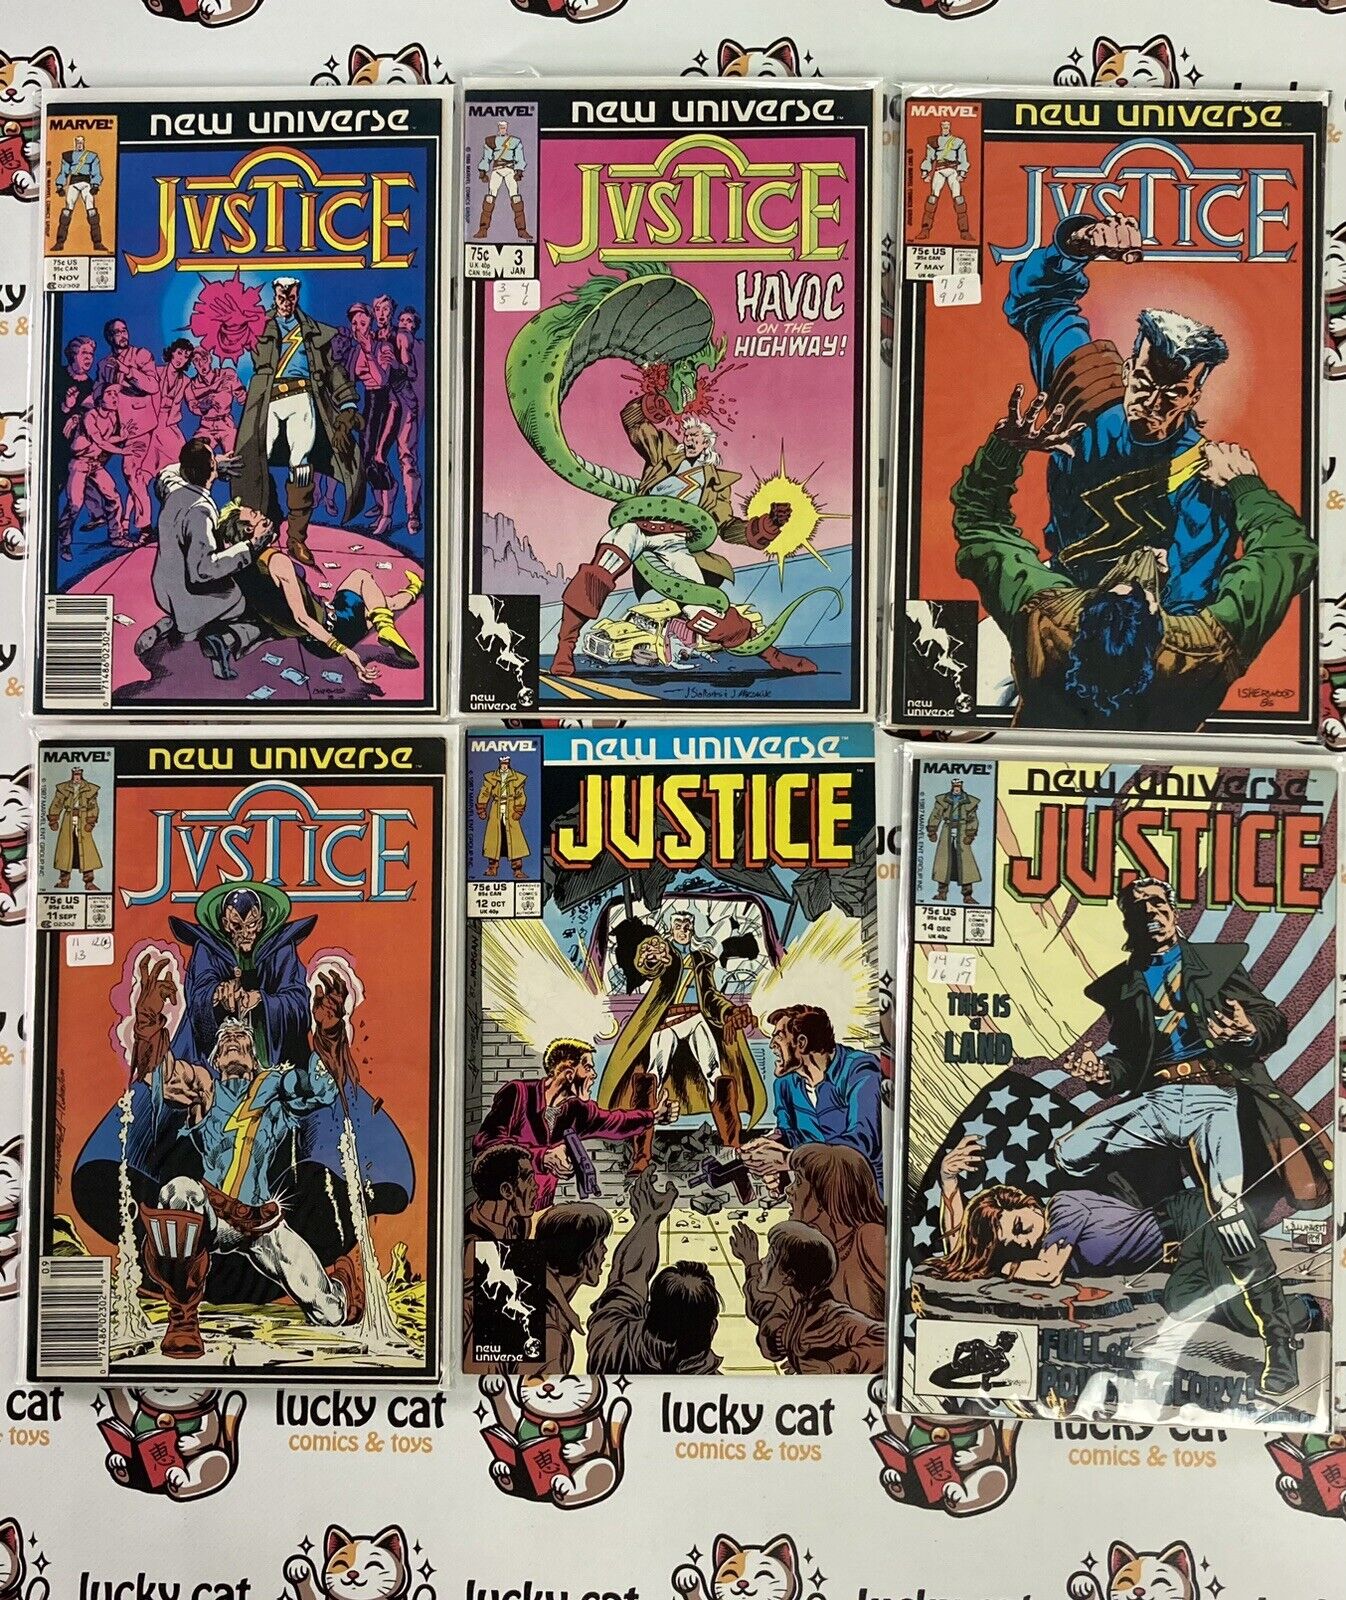 JUSTICE #1-32 (1986) Complete Run Marvel Comics New Universe